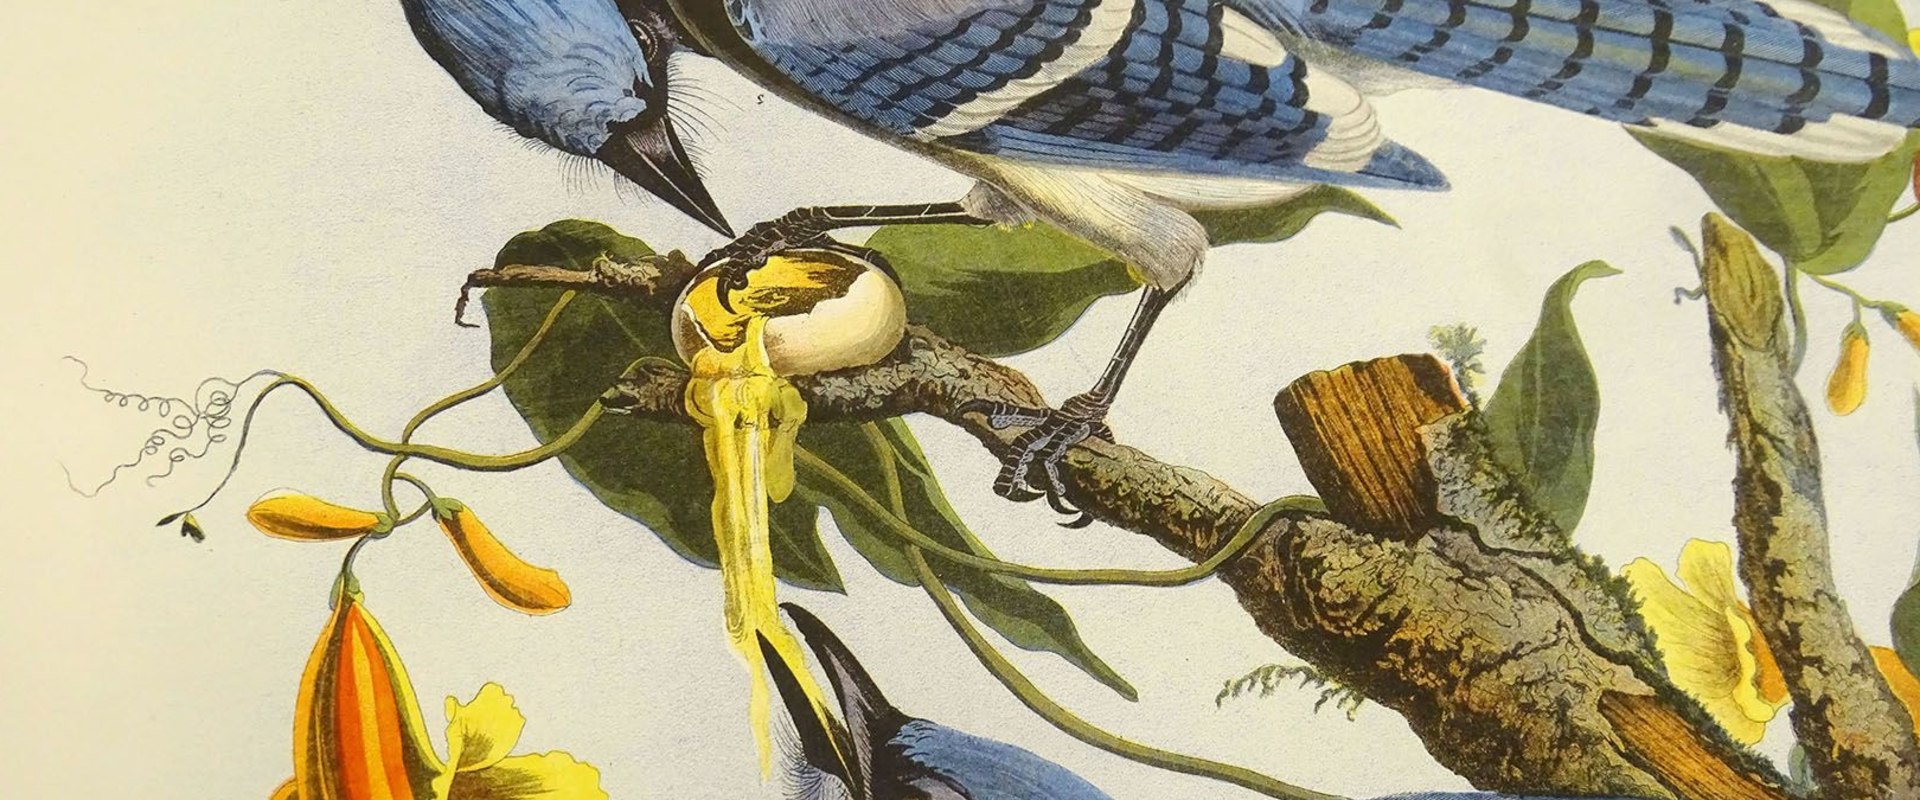 Where did audubon society start?